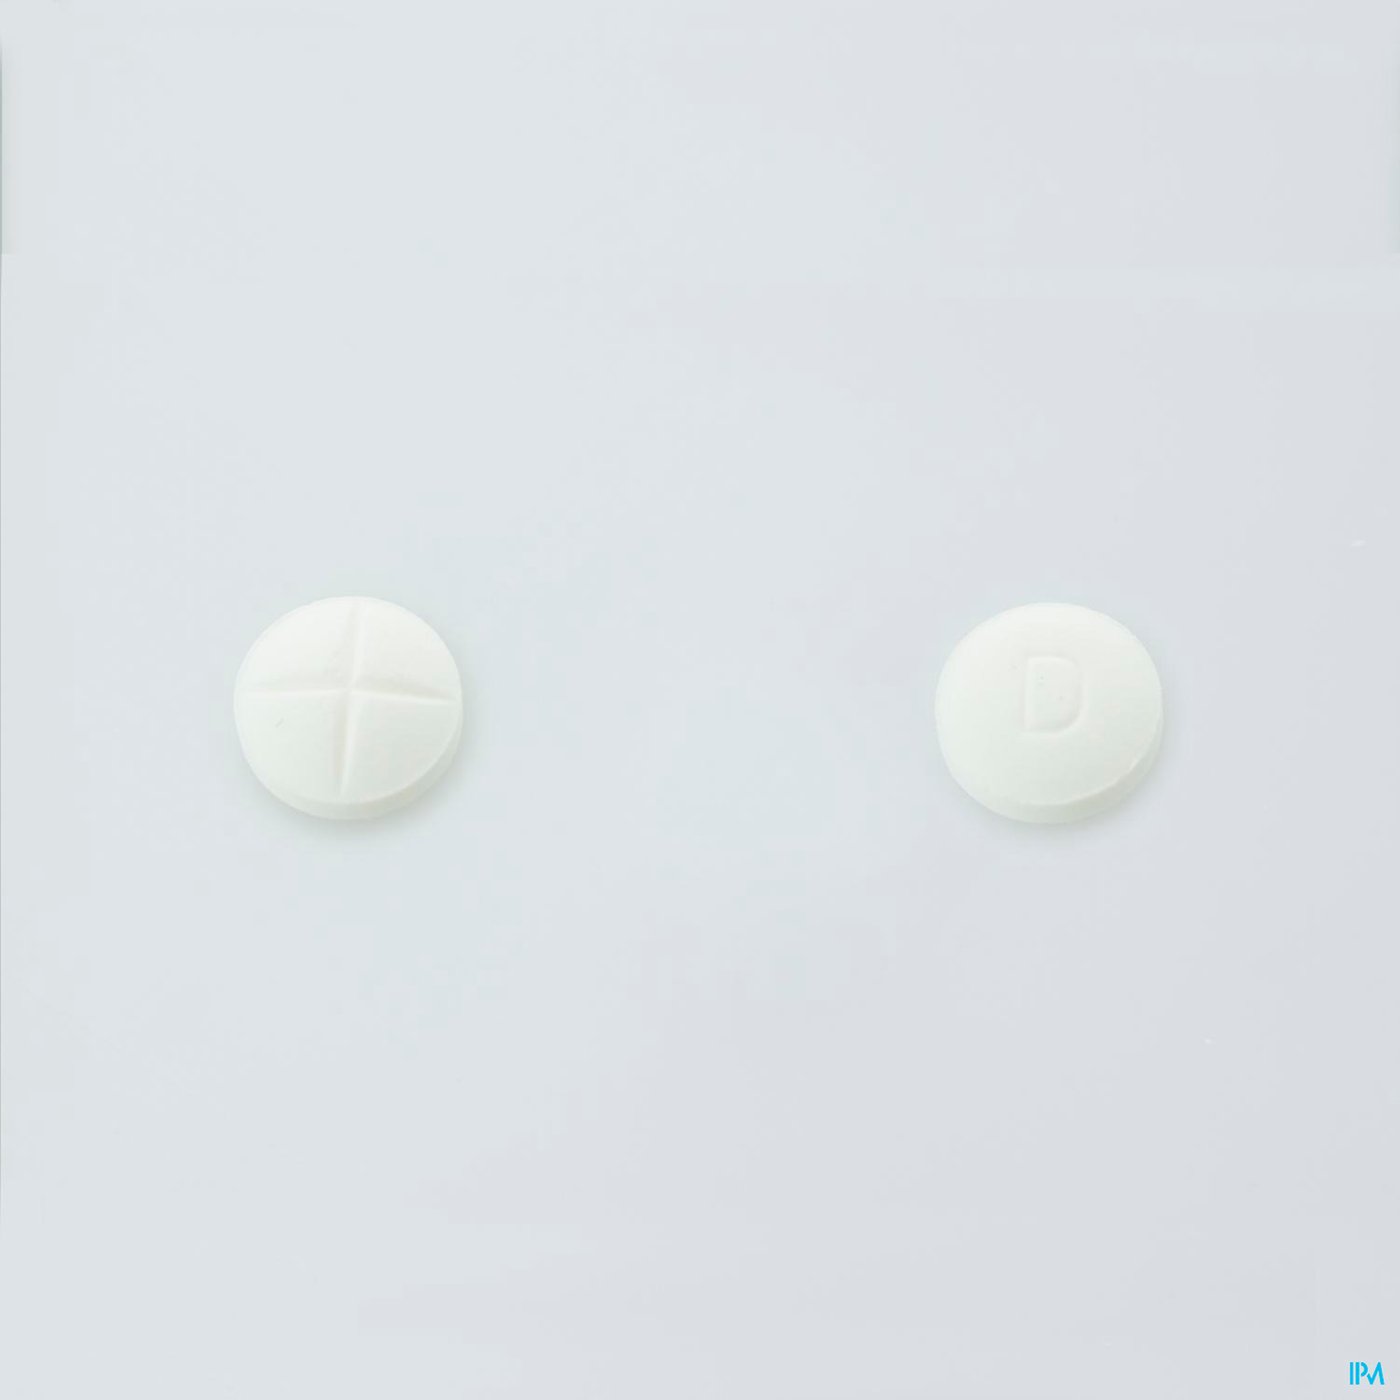 Diazepam Teva Comp 60x10mg pillshot